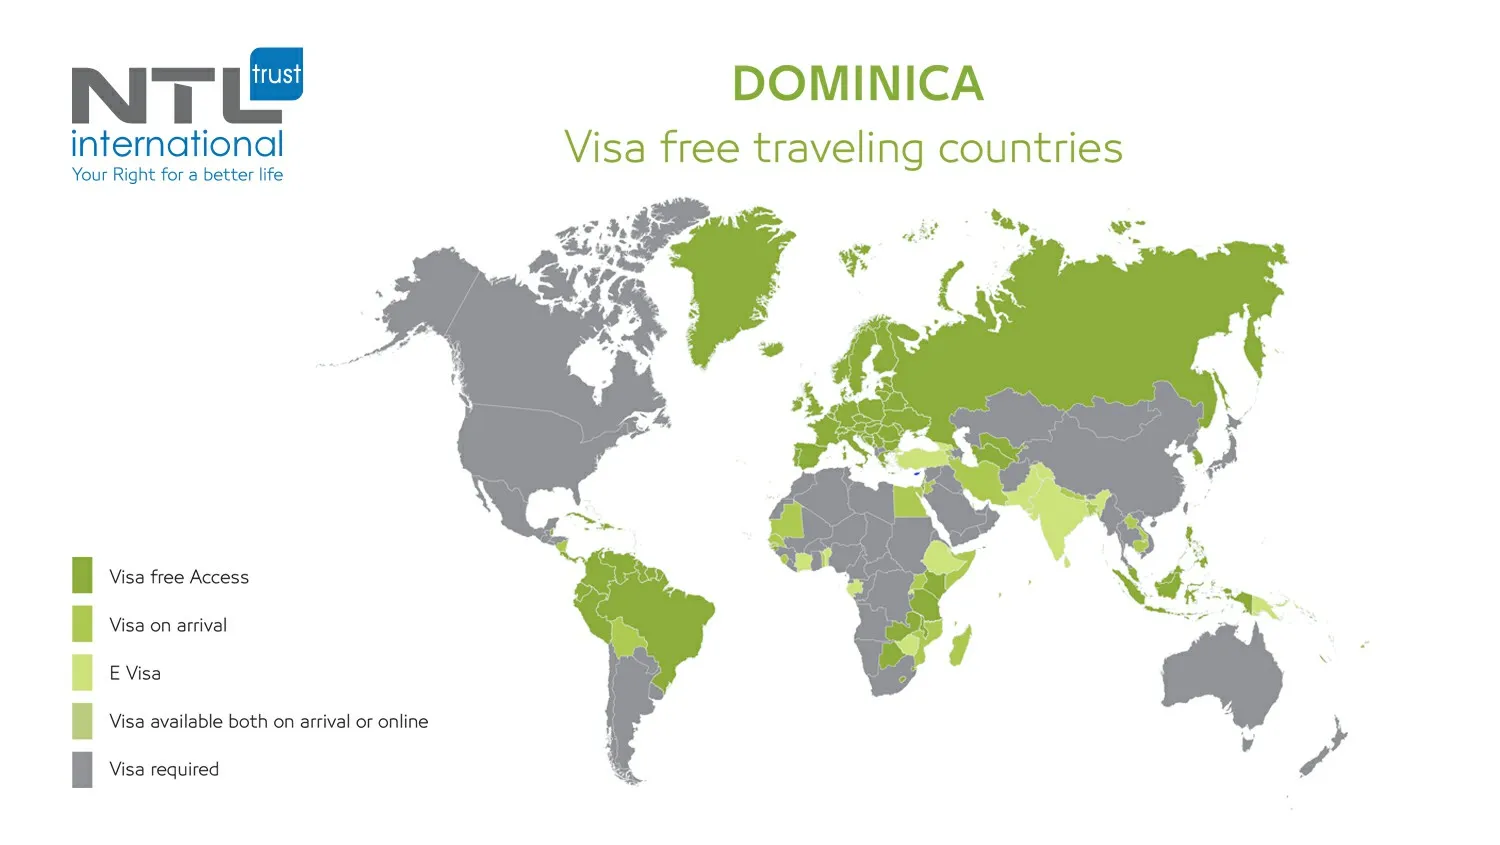 Dominica Visa free traveling map NTL